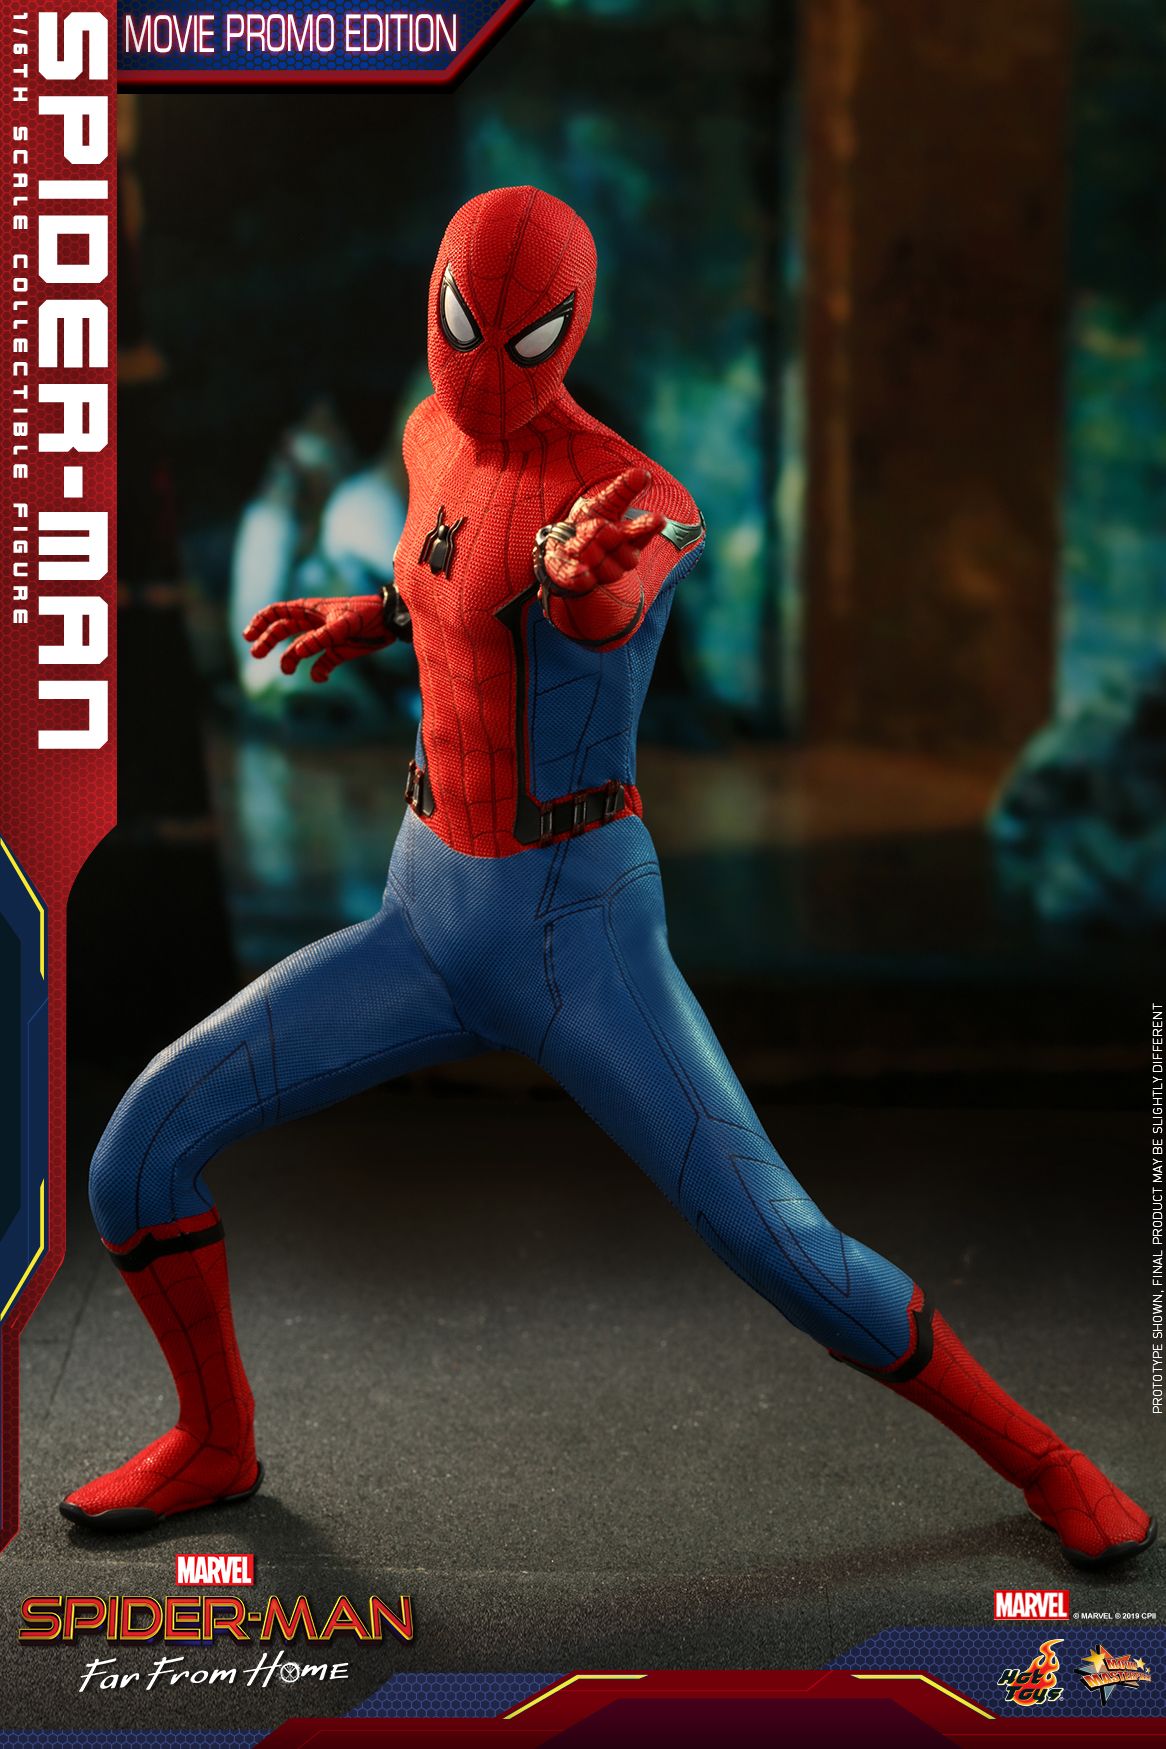 Hot Toys Smffh Spider Man Movie Promo Edition Collectible Figure_pr6